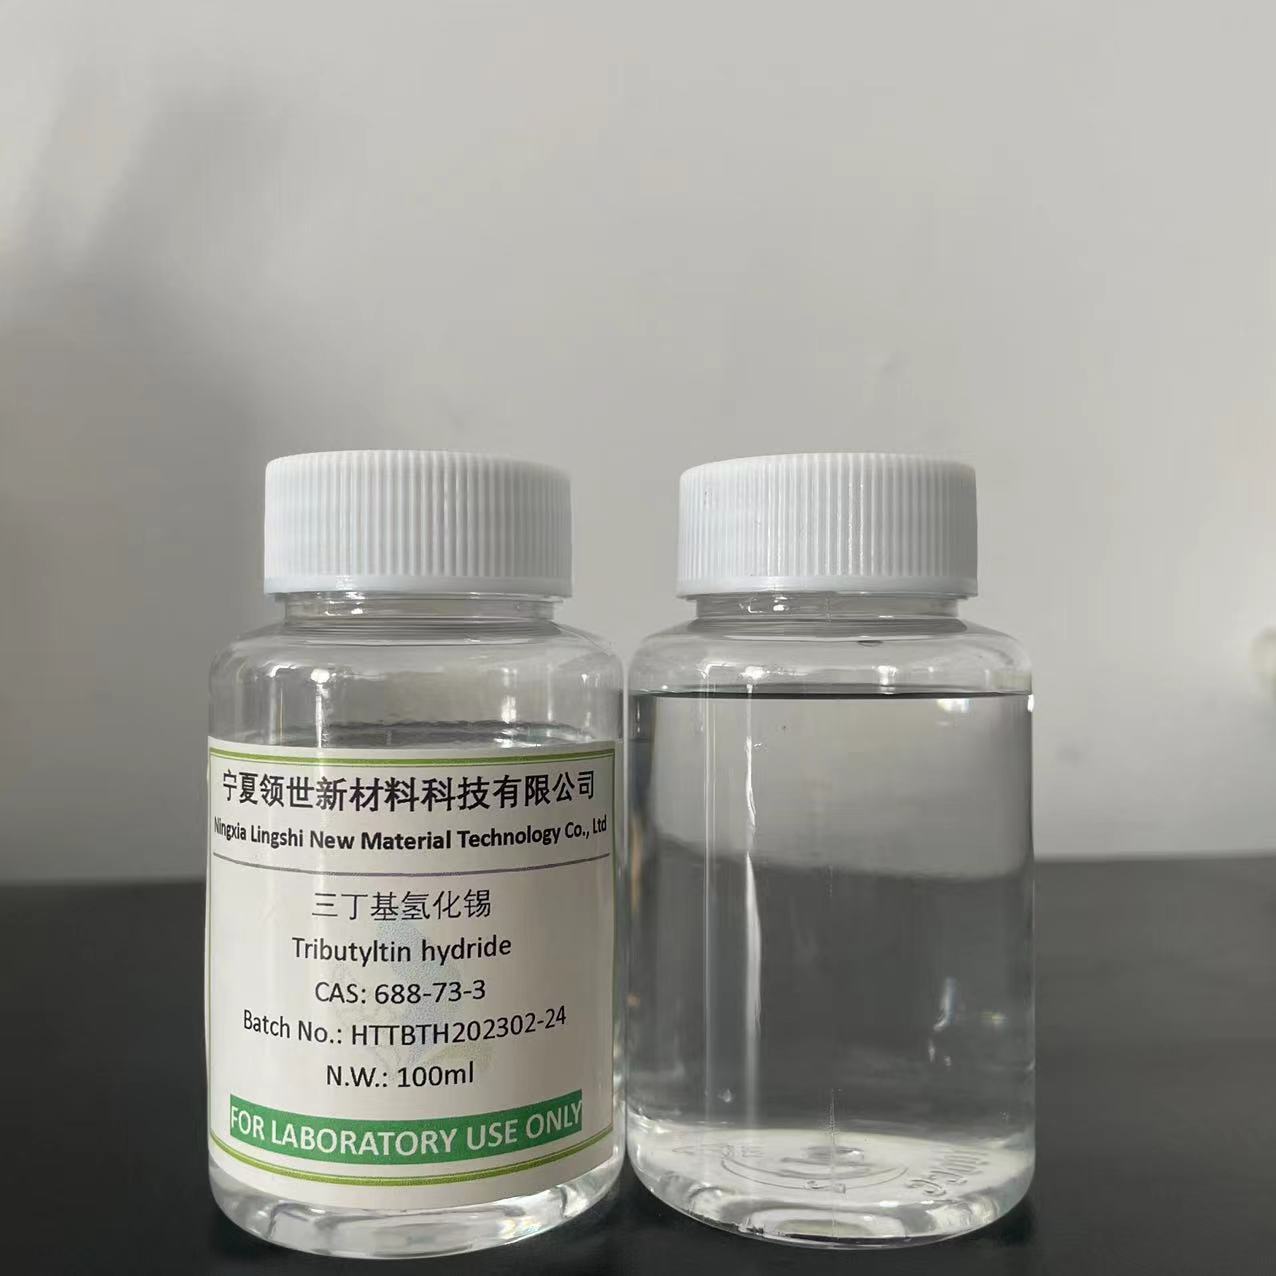 Tributyltin hydride (TBTH)